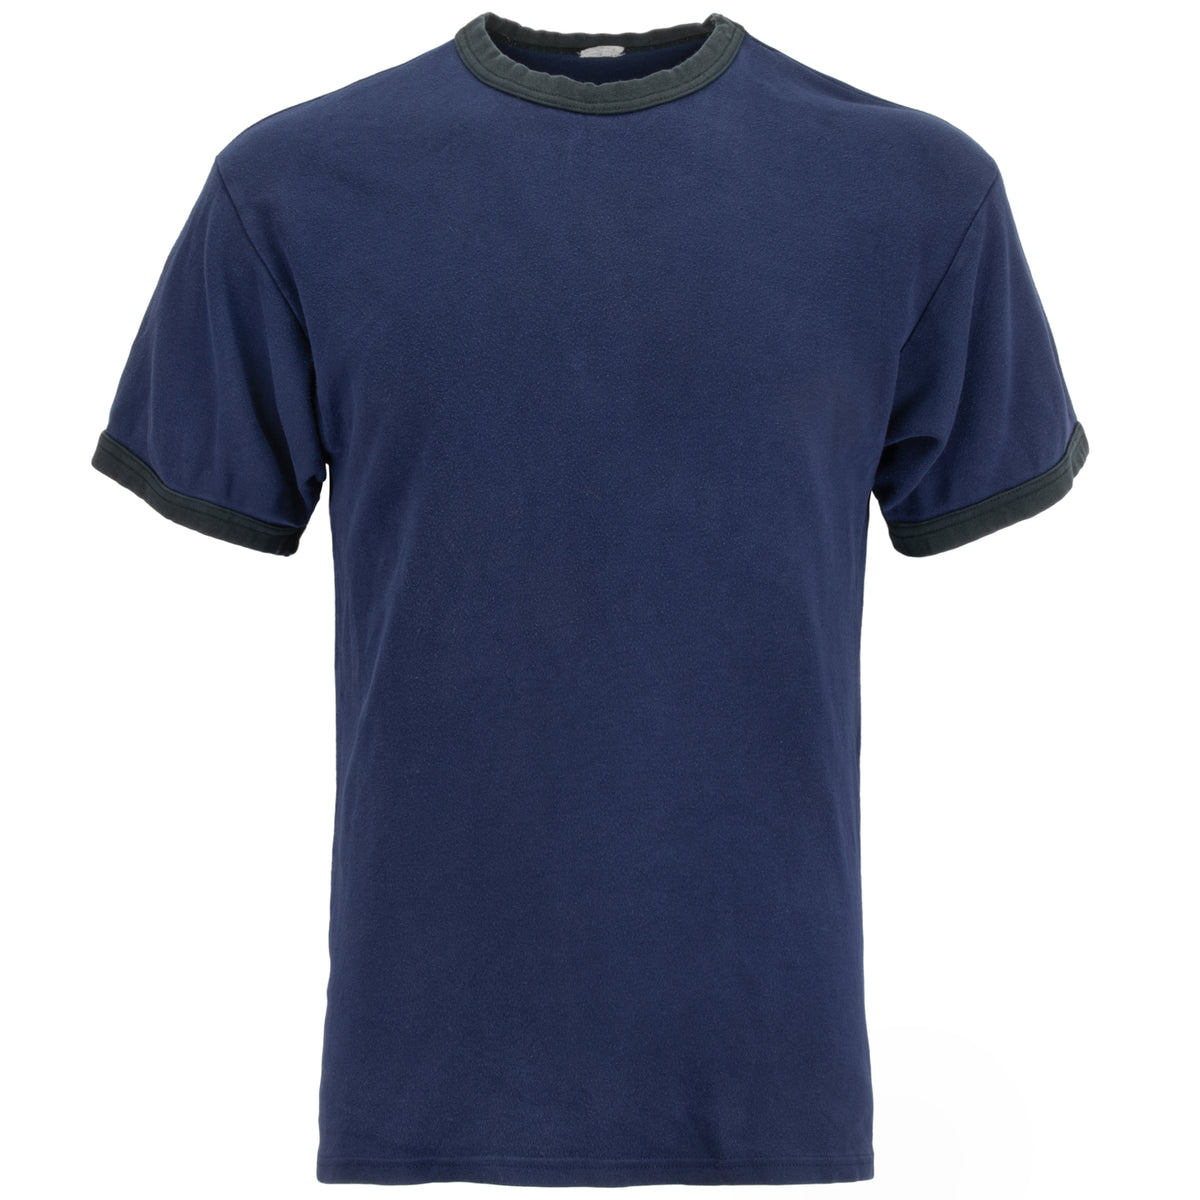 Dutch Army T-Shirt | Navy Blue